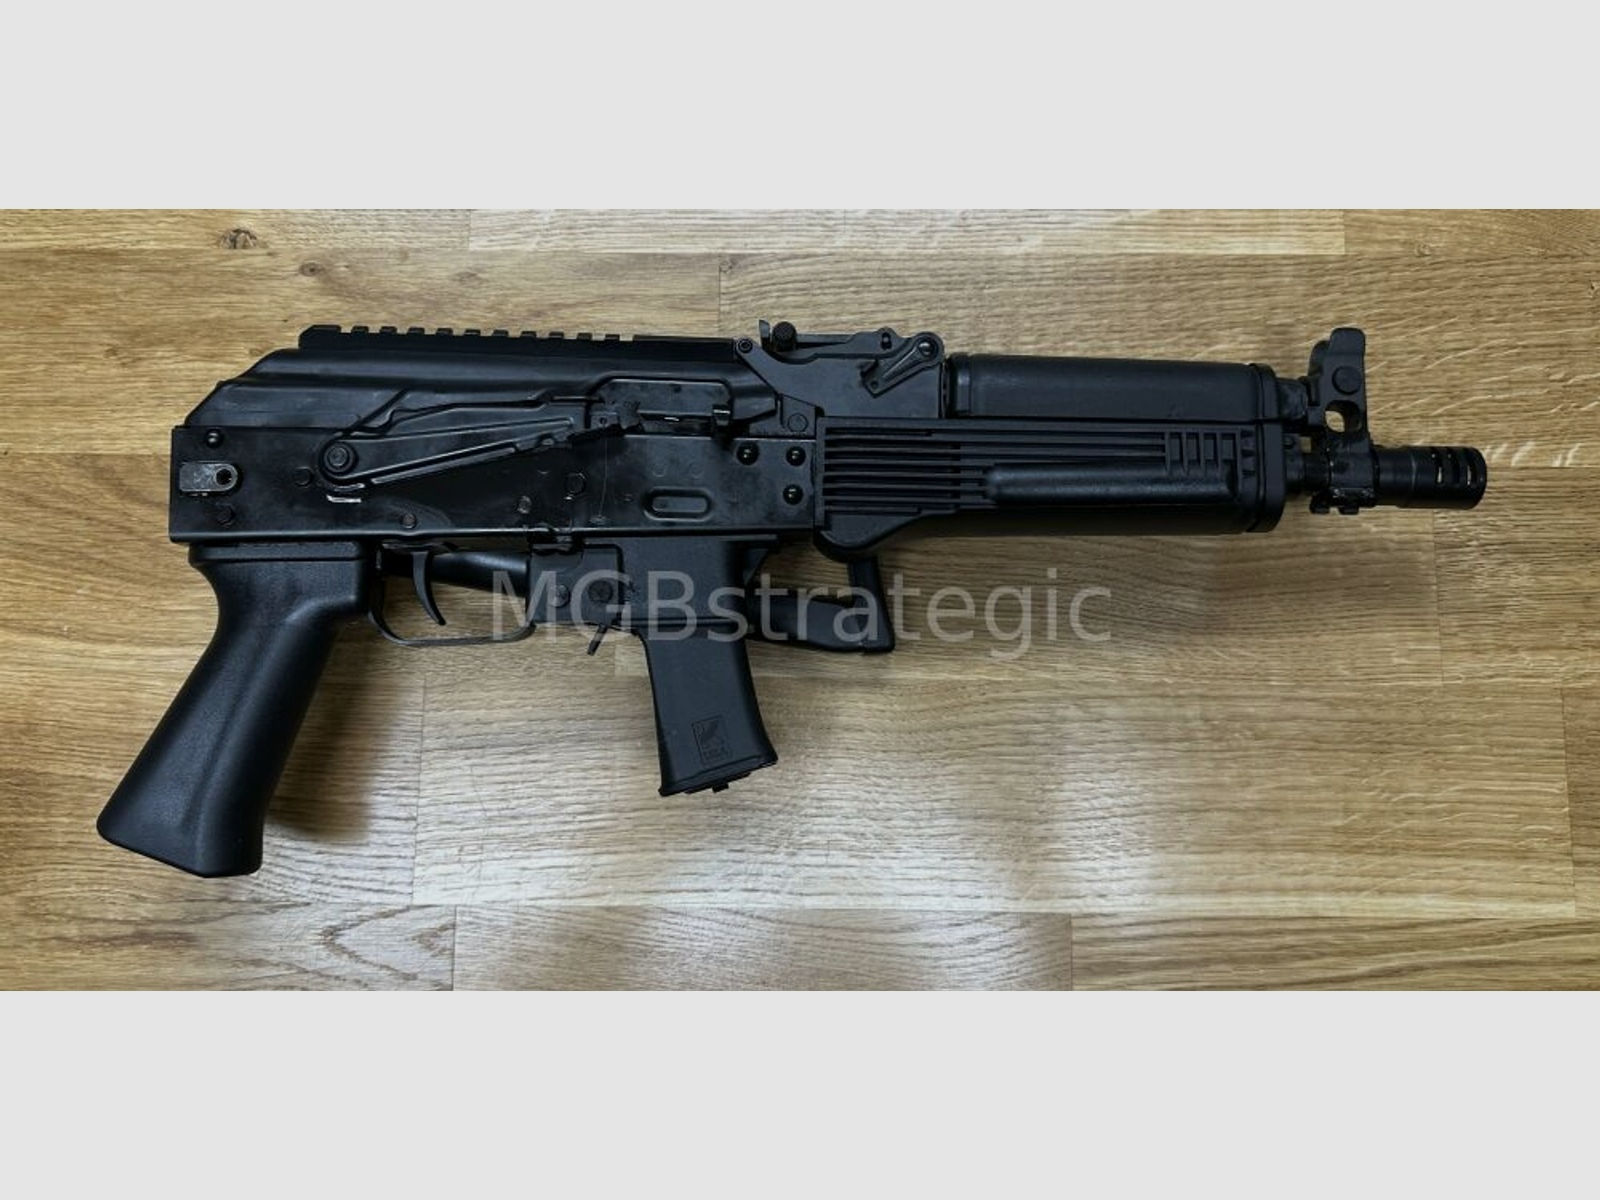 Kalashnikov USA - KP-9 mit Klappschaft - halbautom. Pistole 9mmLuger	 inkl. 6x 10 Schuss Magazin - System AK47 AK74 AK-74 AK-47 KP9